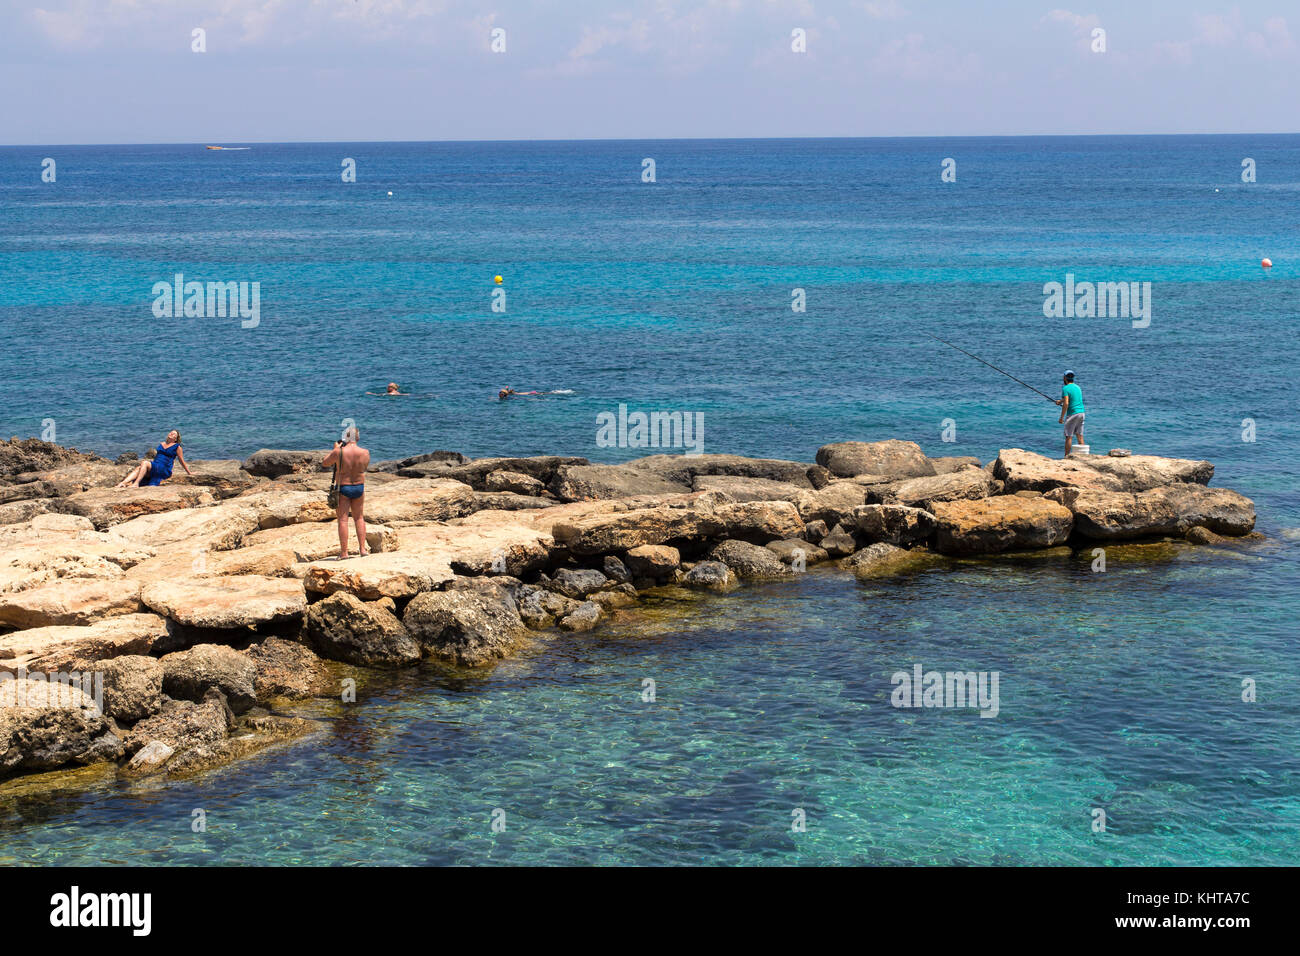 Protaras, Cyprus. 14th June 2017. Credit: Tove Larsen/Alamy Stock Photo